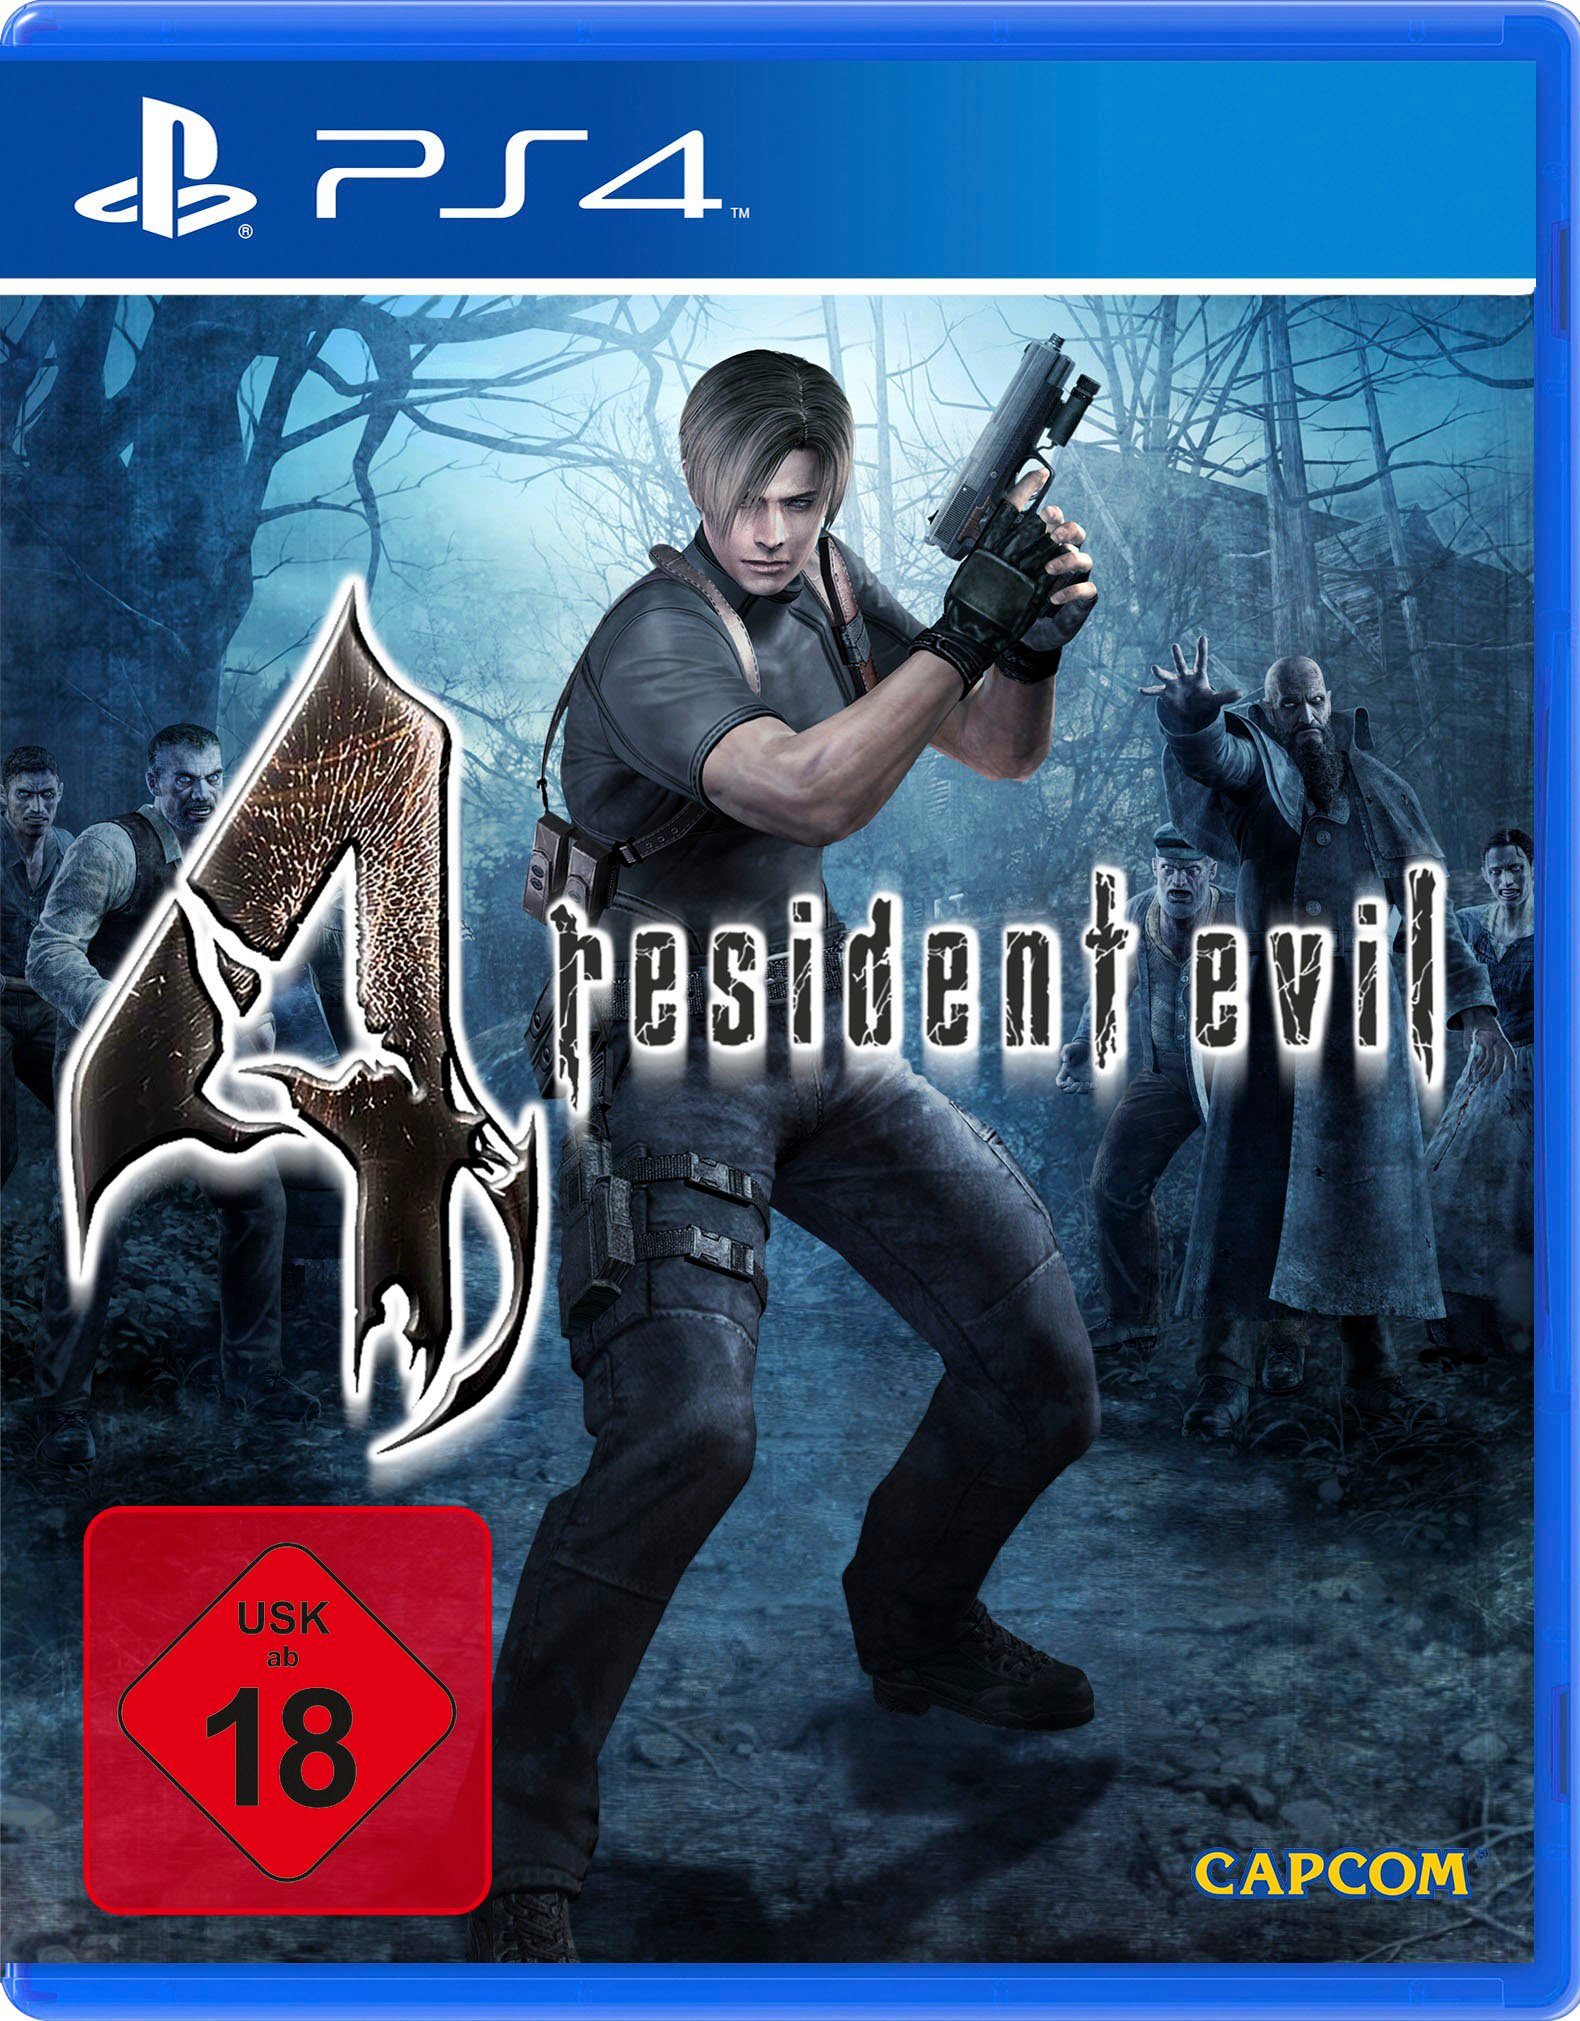 4 Resident 4 Capcom PlayStation Evil